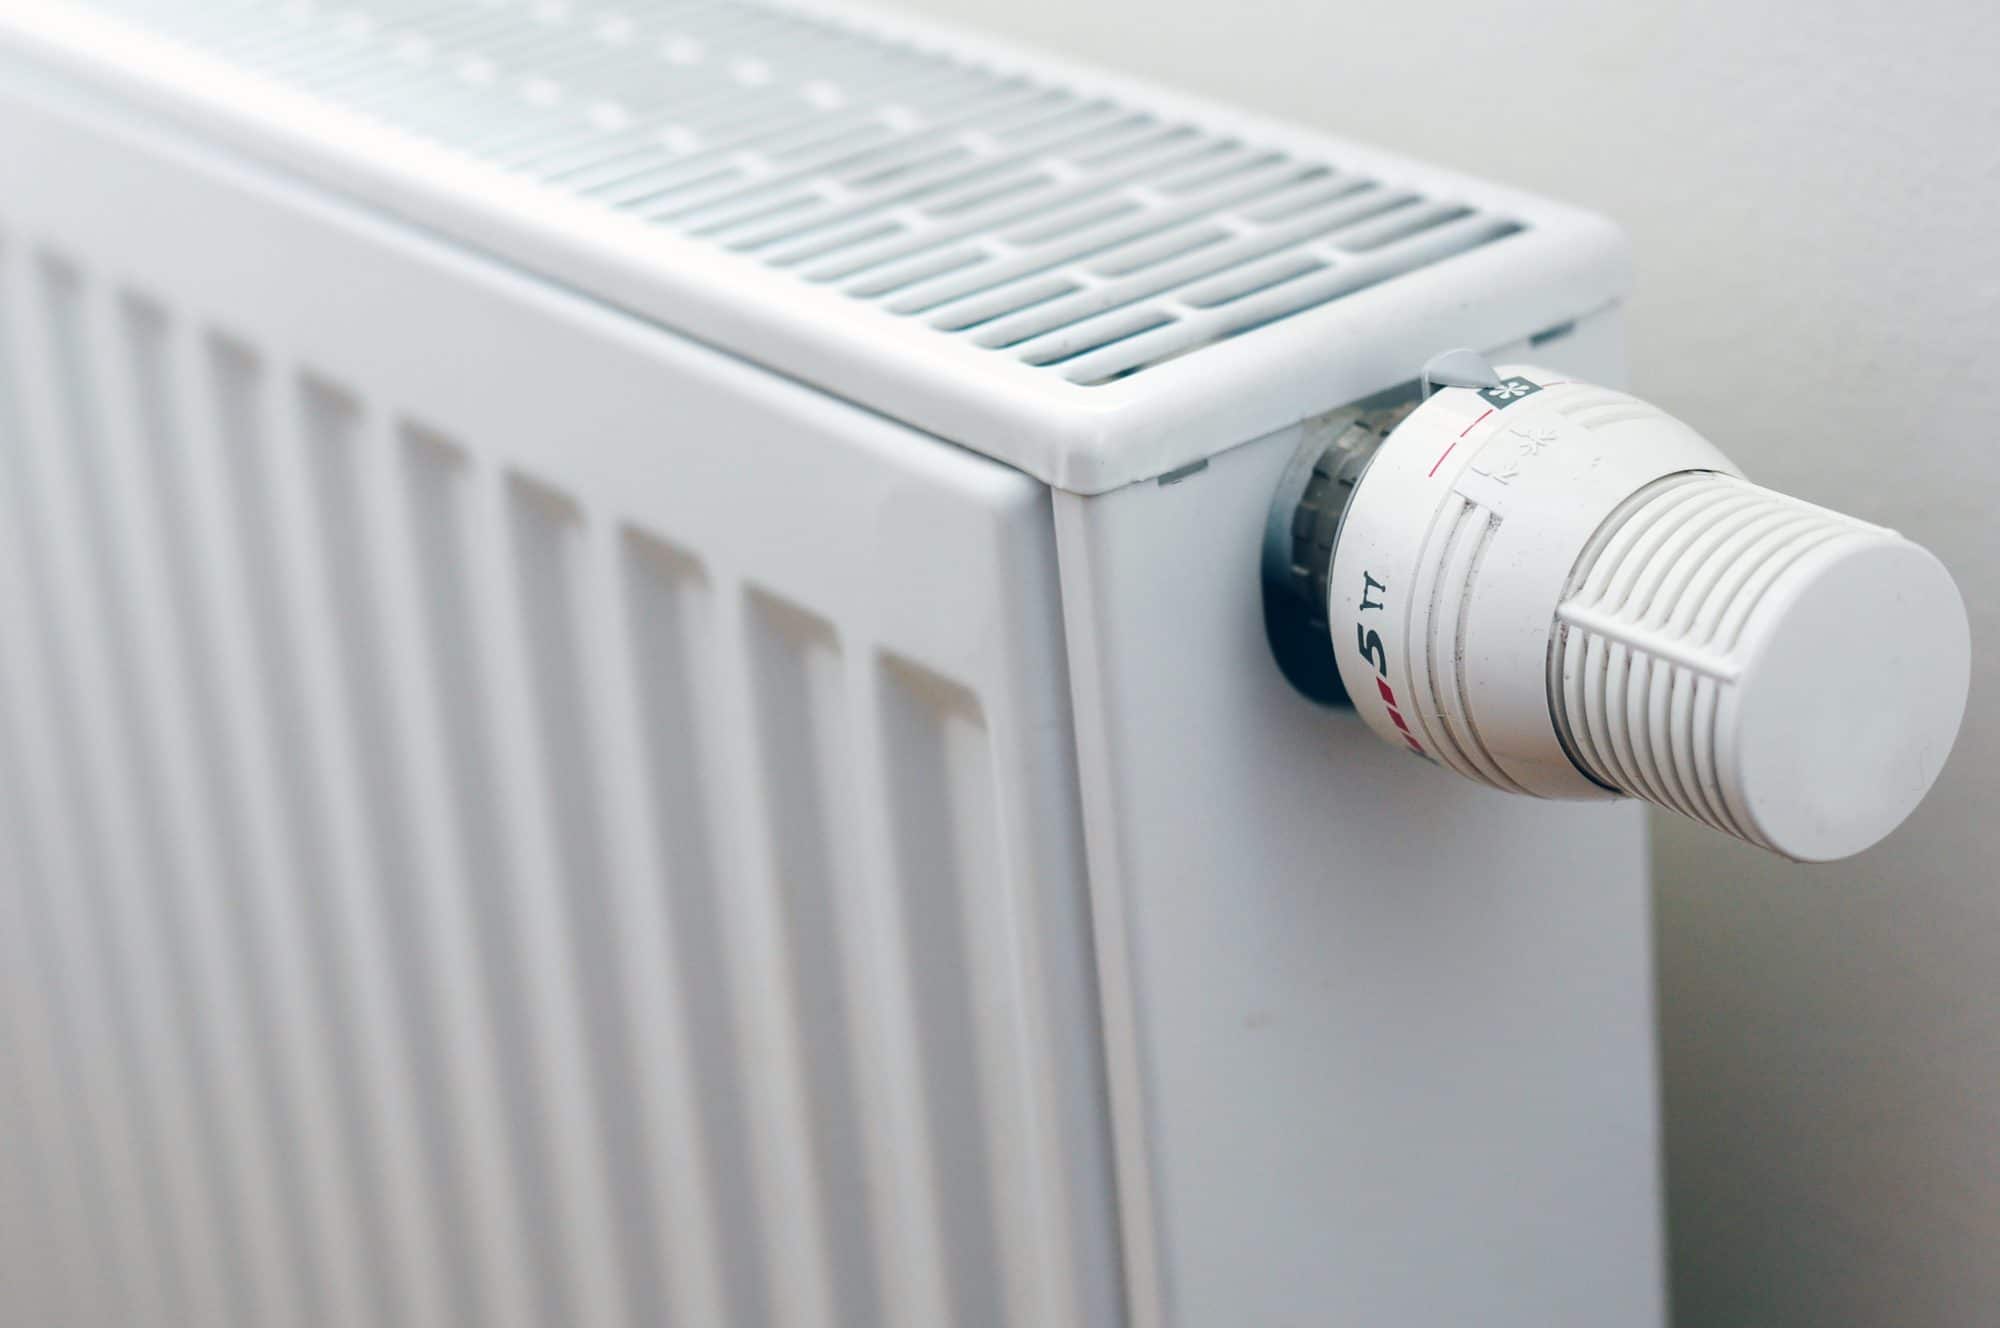 Vloerverwarming versus radiatoren